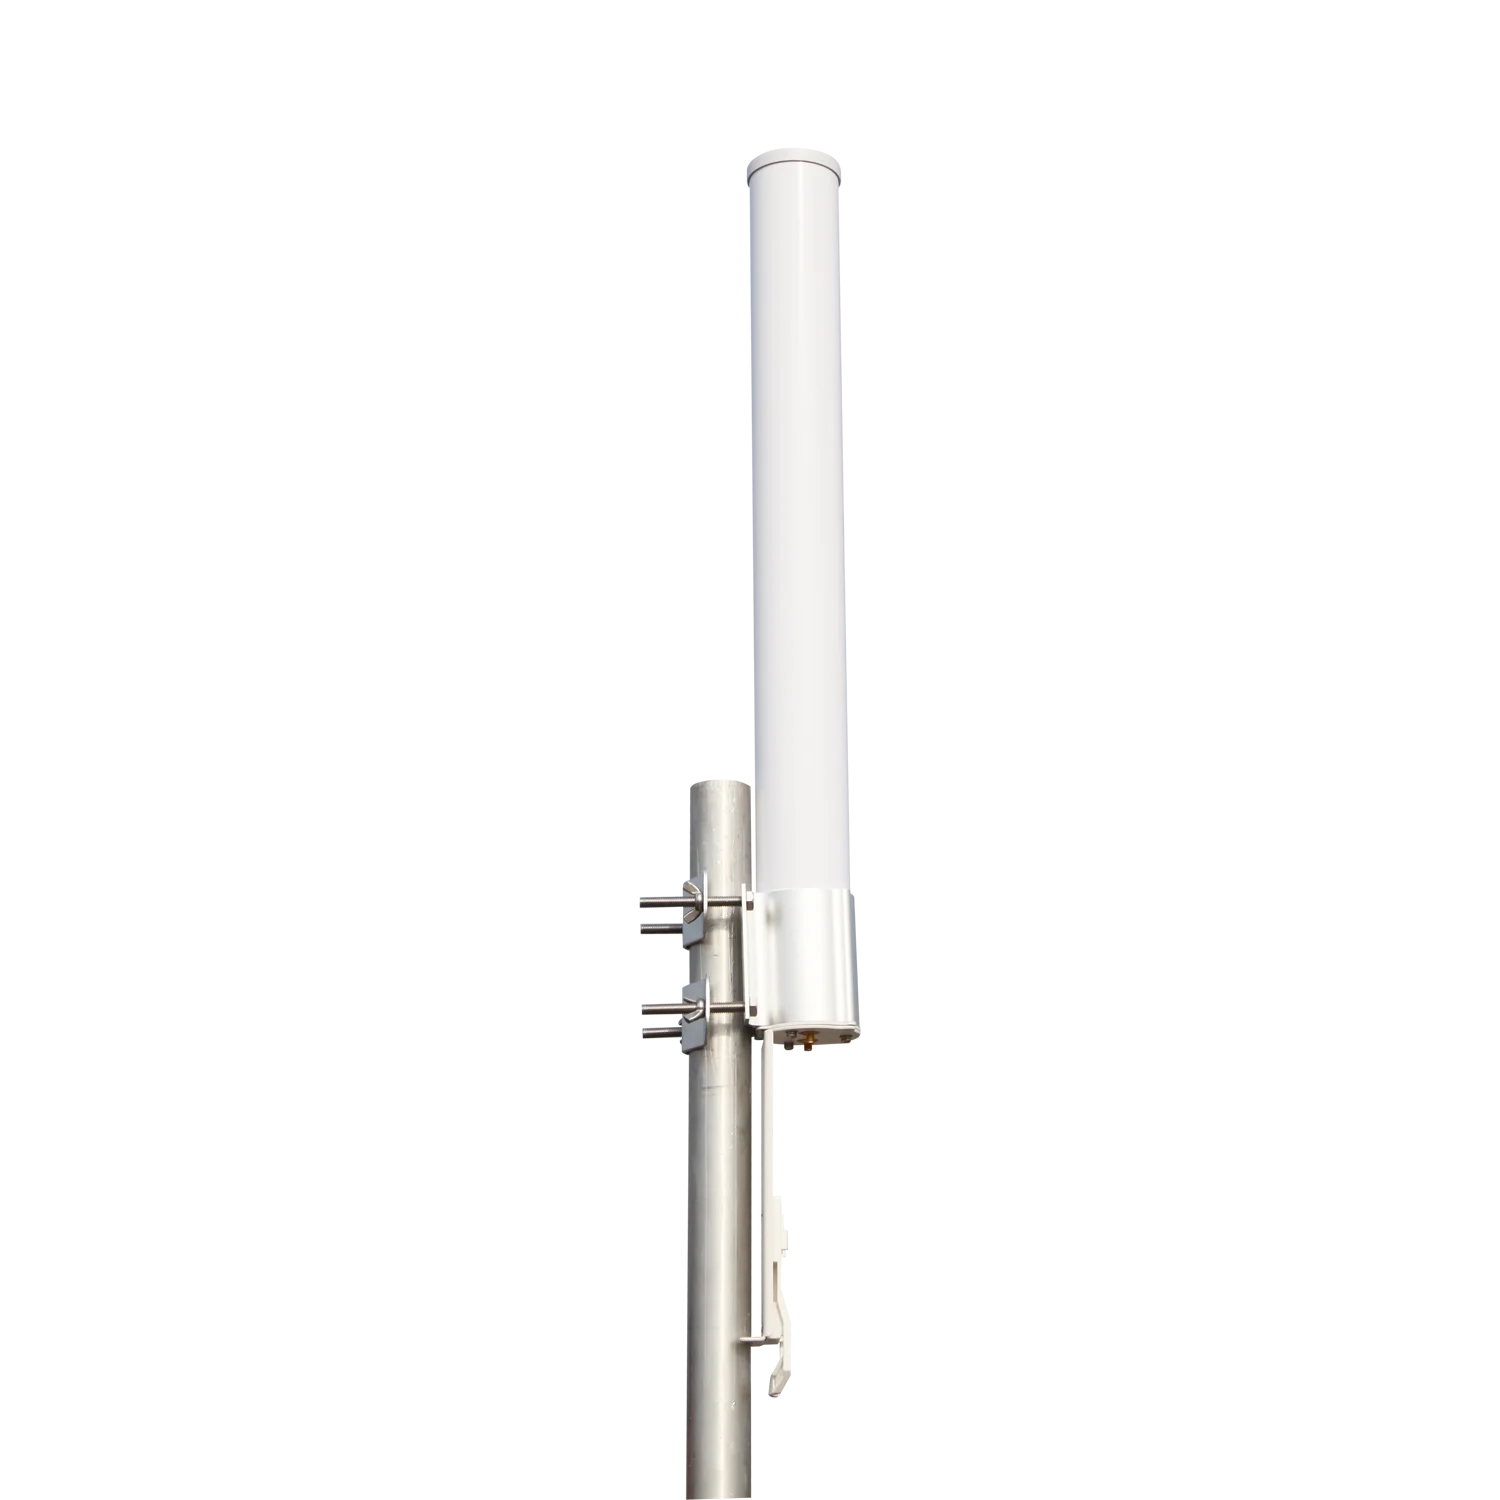 2.4GHz 13dBi Outdoor omni antenna, airMAX  antenna  for ubnt rocket m5 and ac Dual Polarized MIMO Omni Antenna